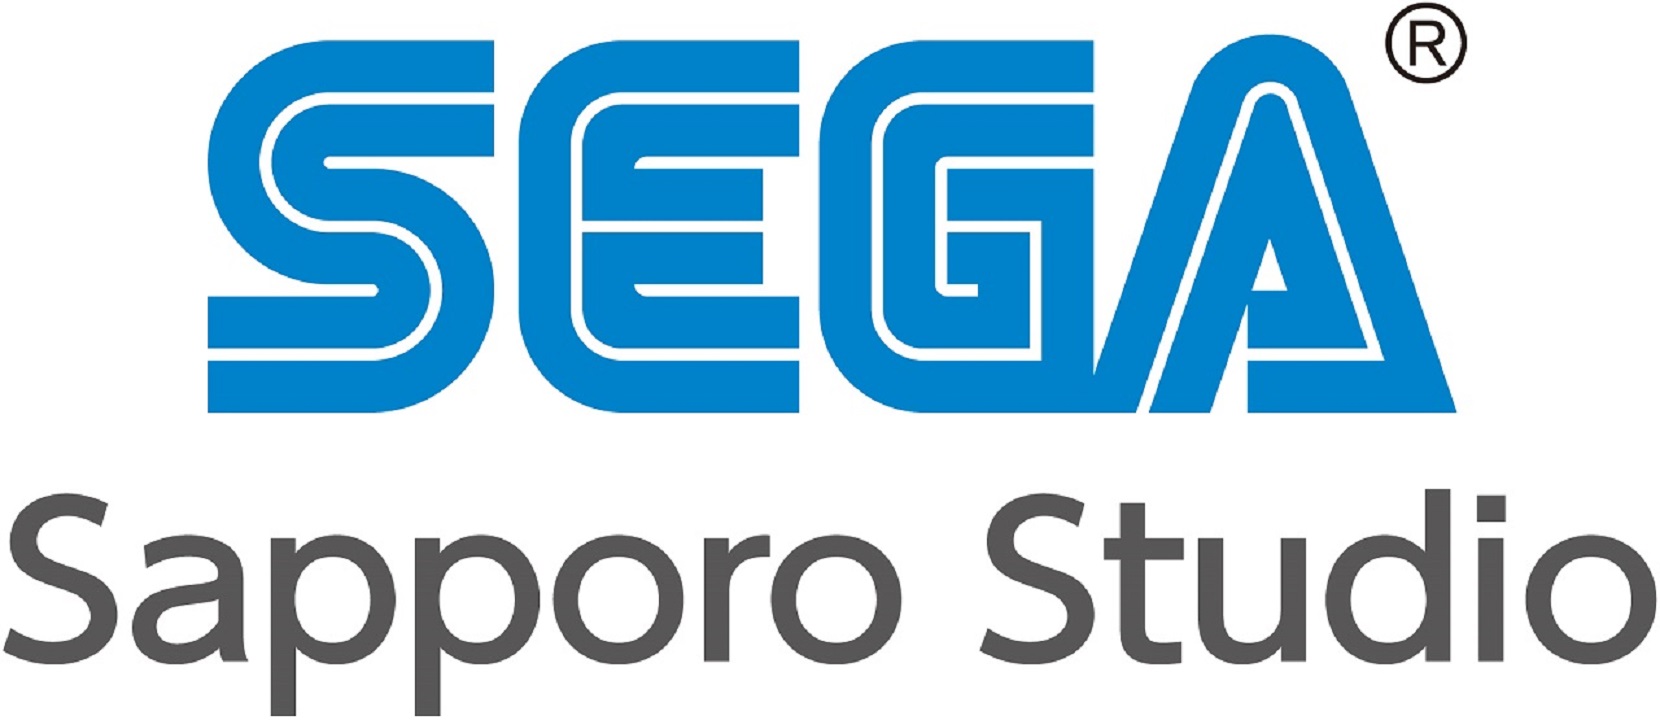 Sega has opened a new studio in Sapporo, Japan